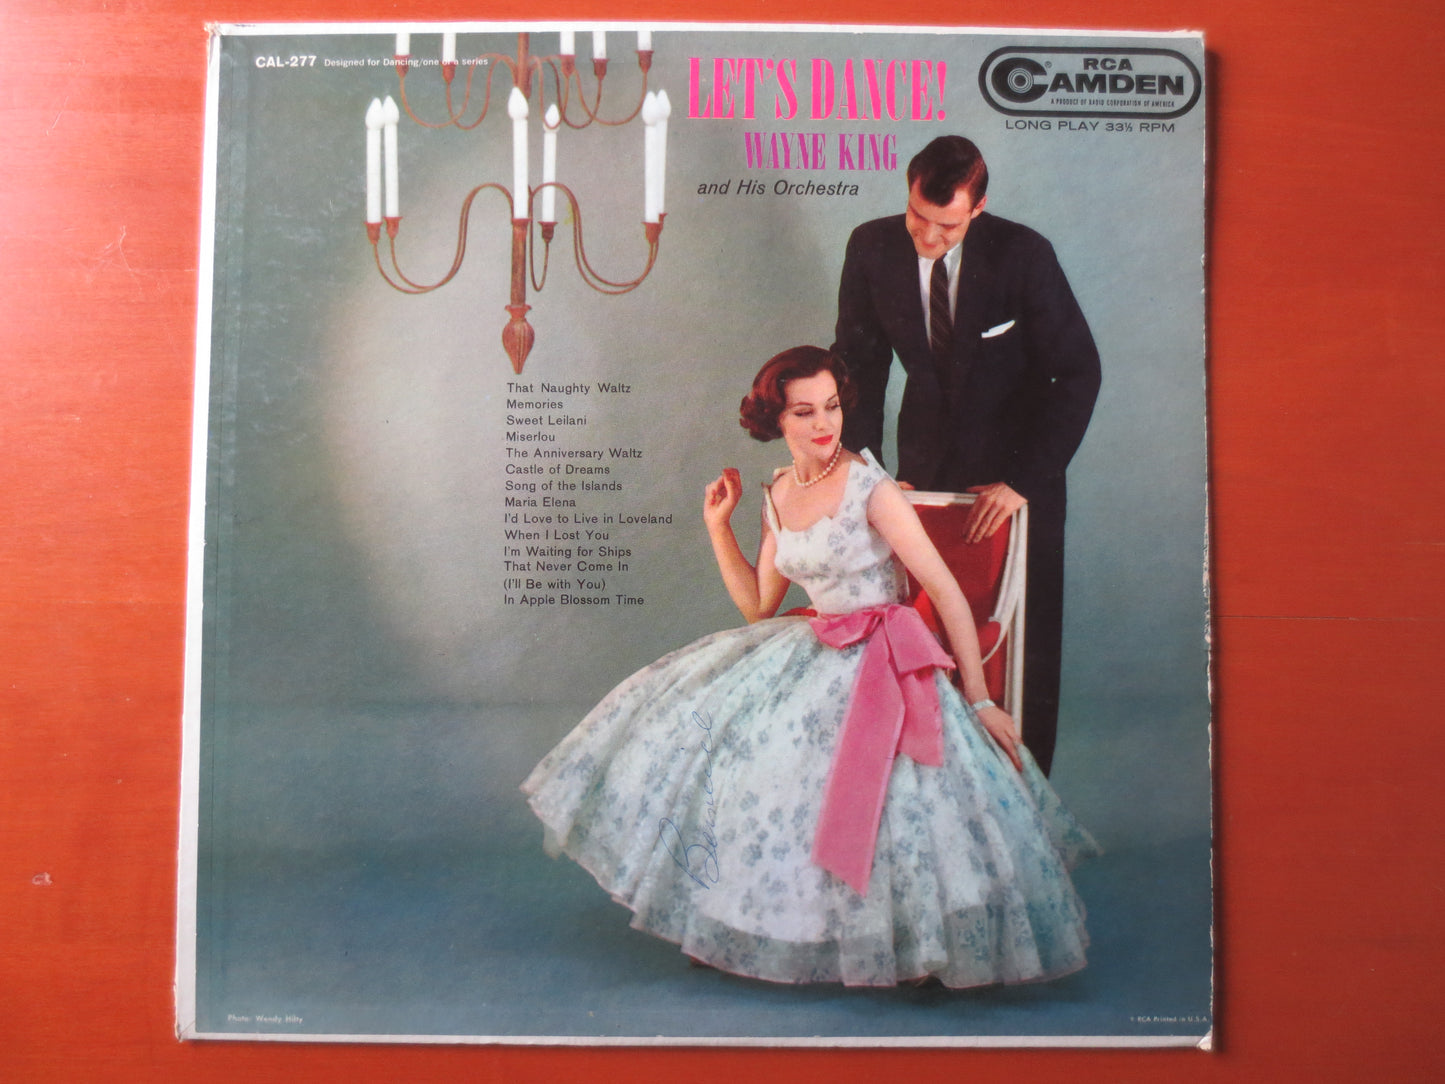 WAYNE KING, Let's DANCE, Wayne King Records, Wayne King Albums, Vintage Vinyl, Vinyl Records, Vinyl Albums, 1955 Records